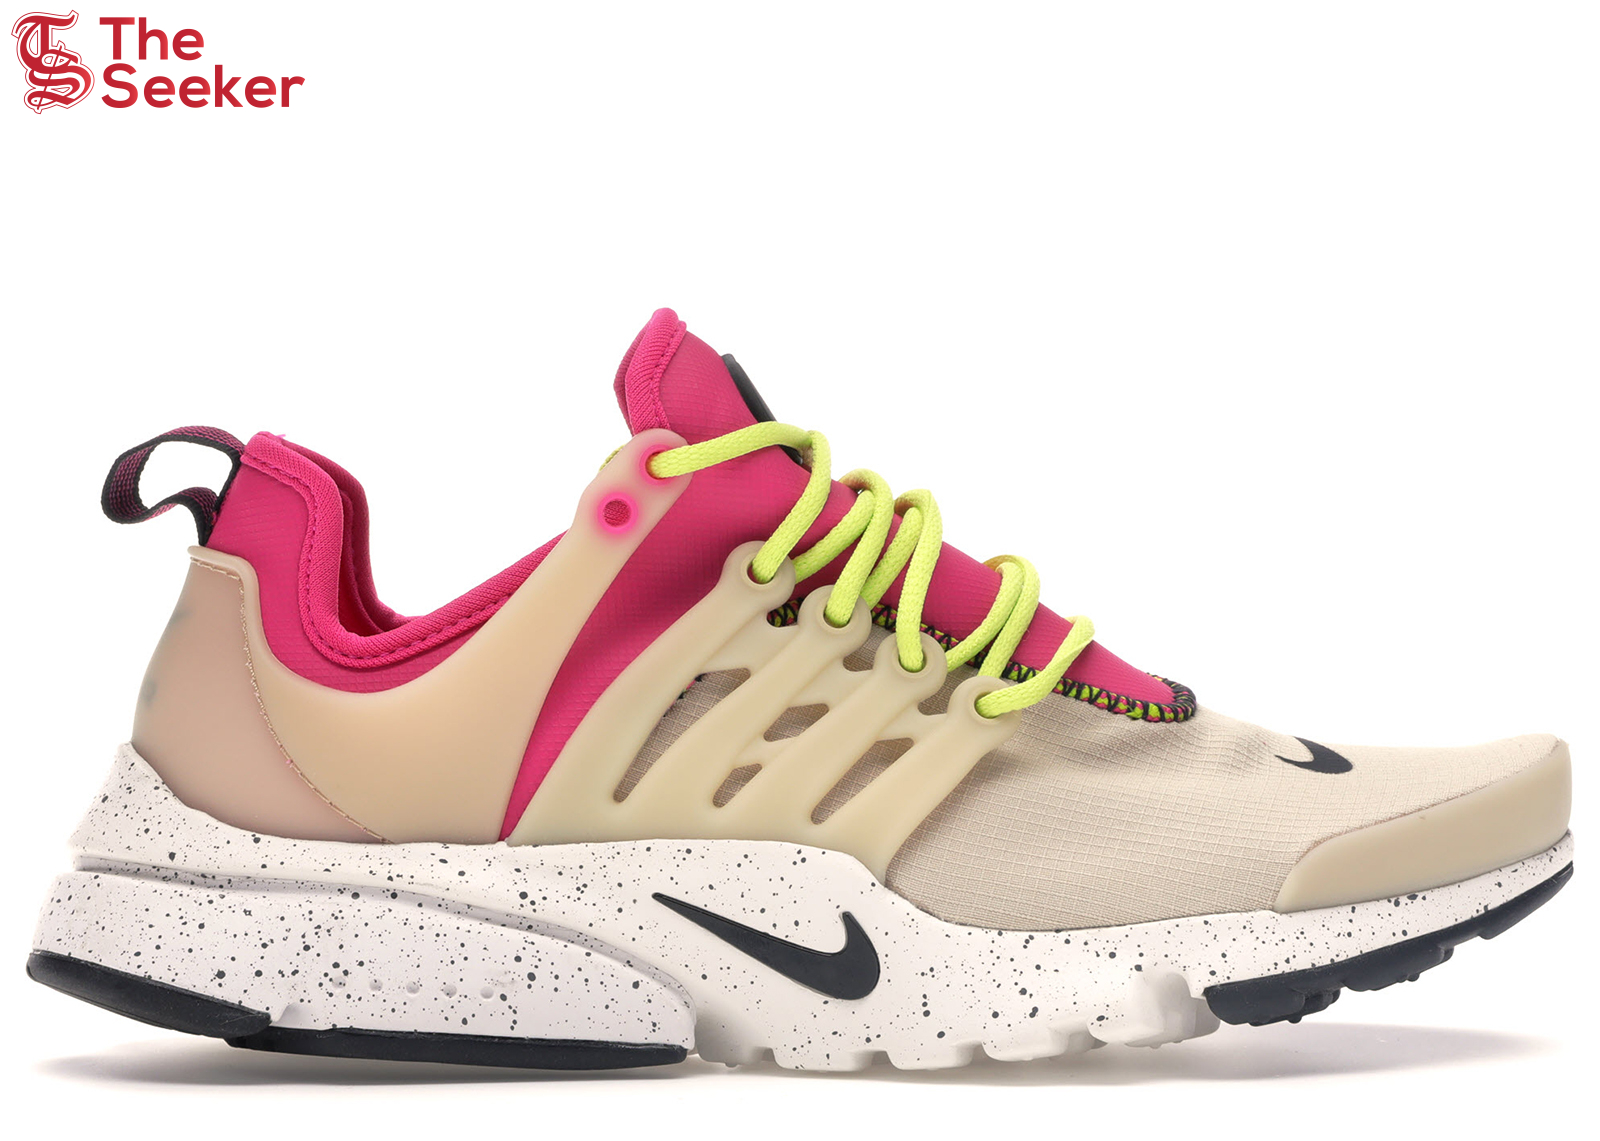 Nike Air Presto Mushroom Deadly Pink (Women's)